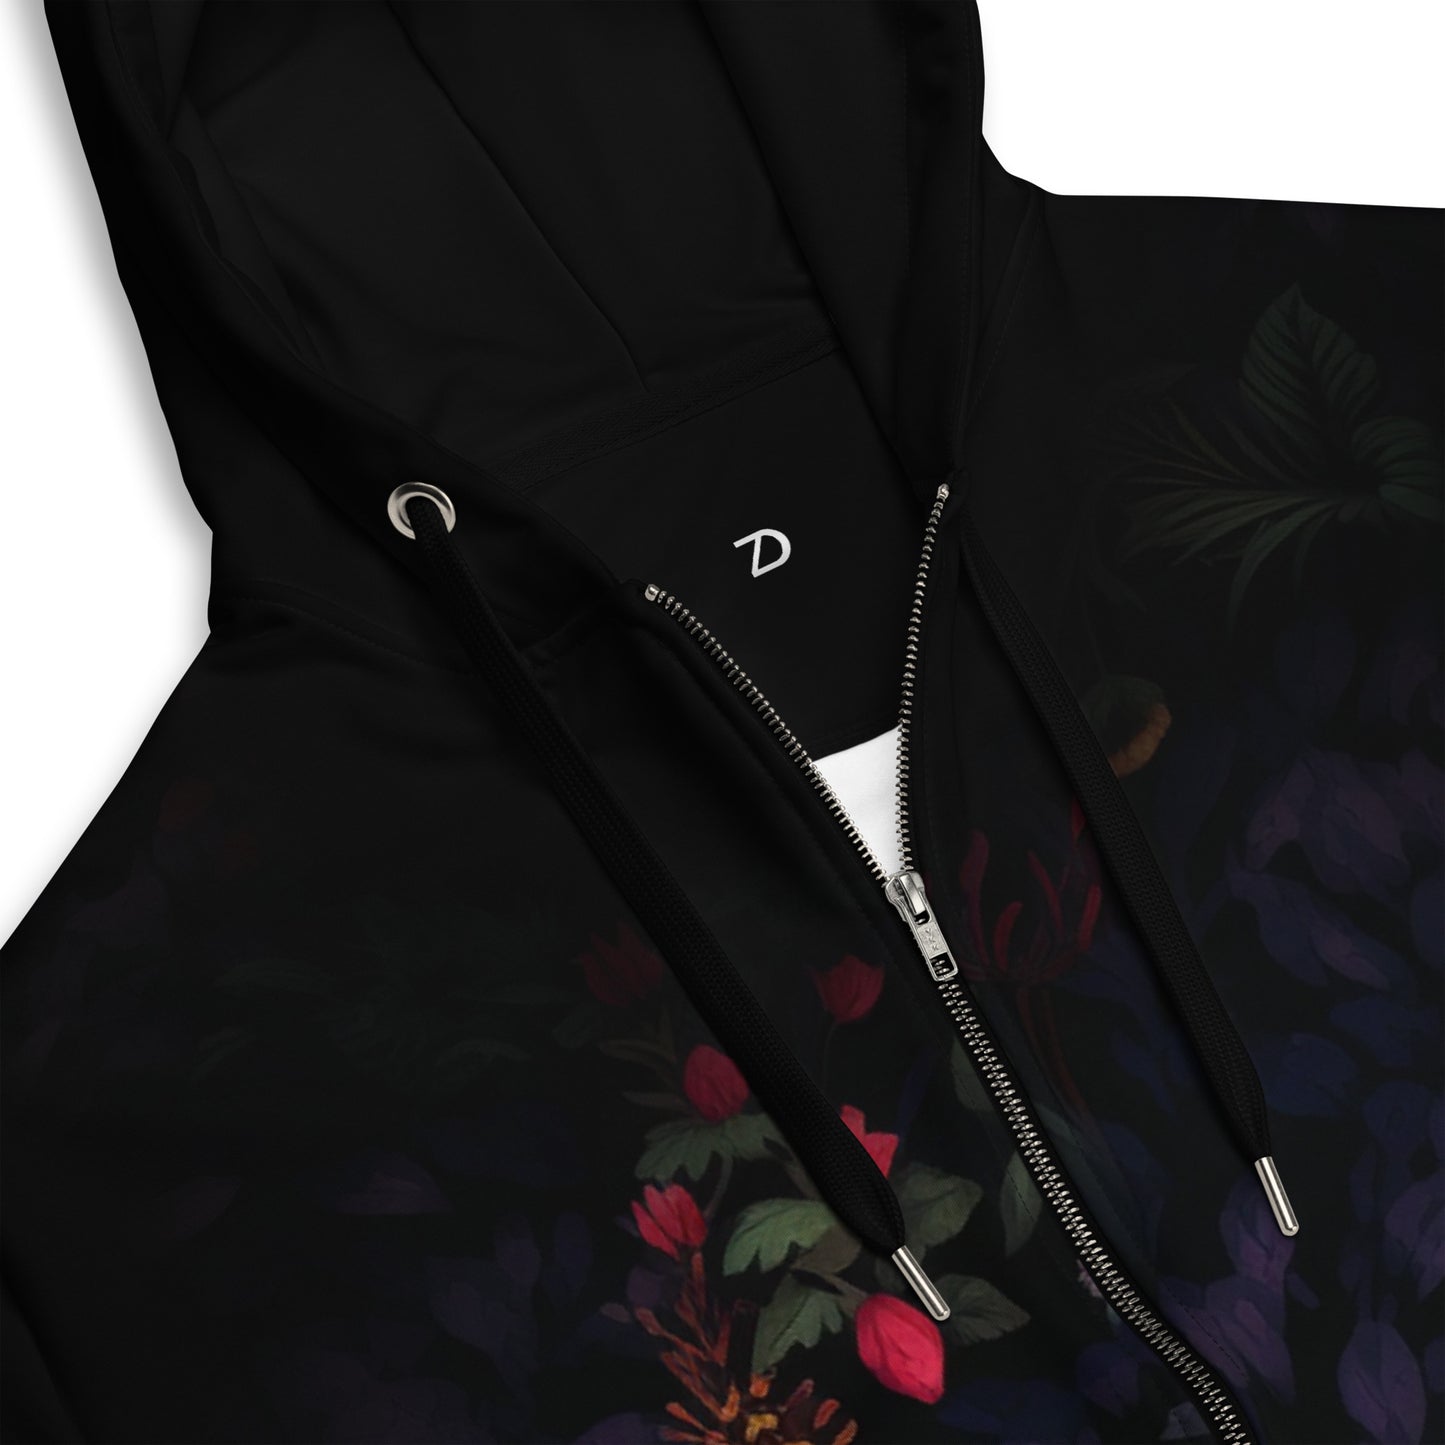 Neduz Floral Dark Background Unisex Zip Hoodie - Eco-Friendly Recycled Polyester with Soft Fleece Interior